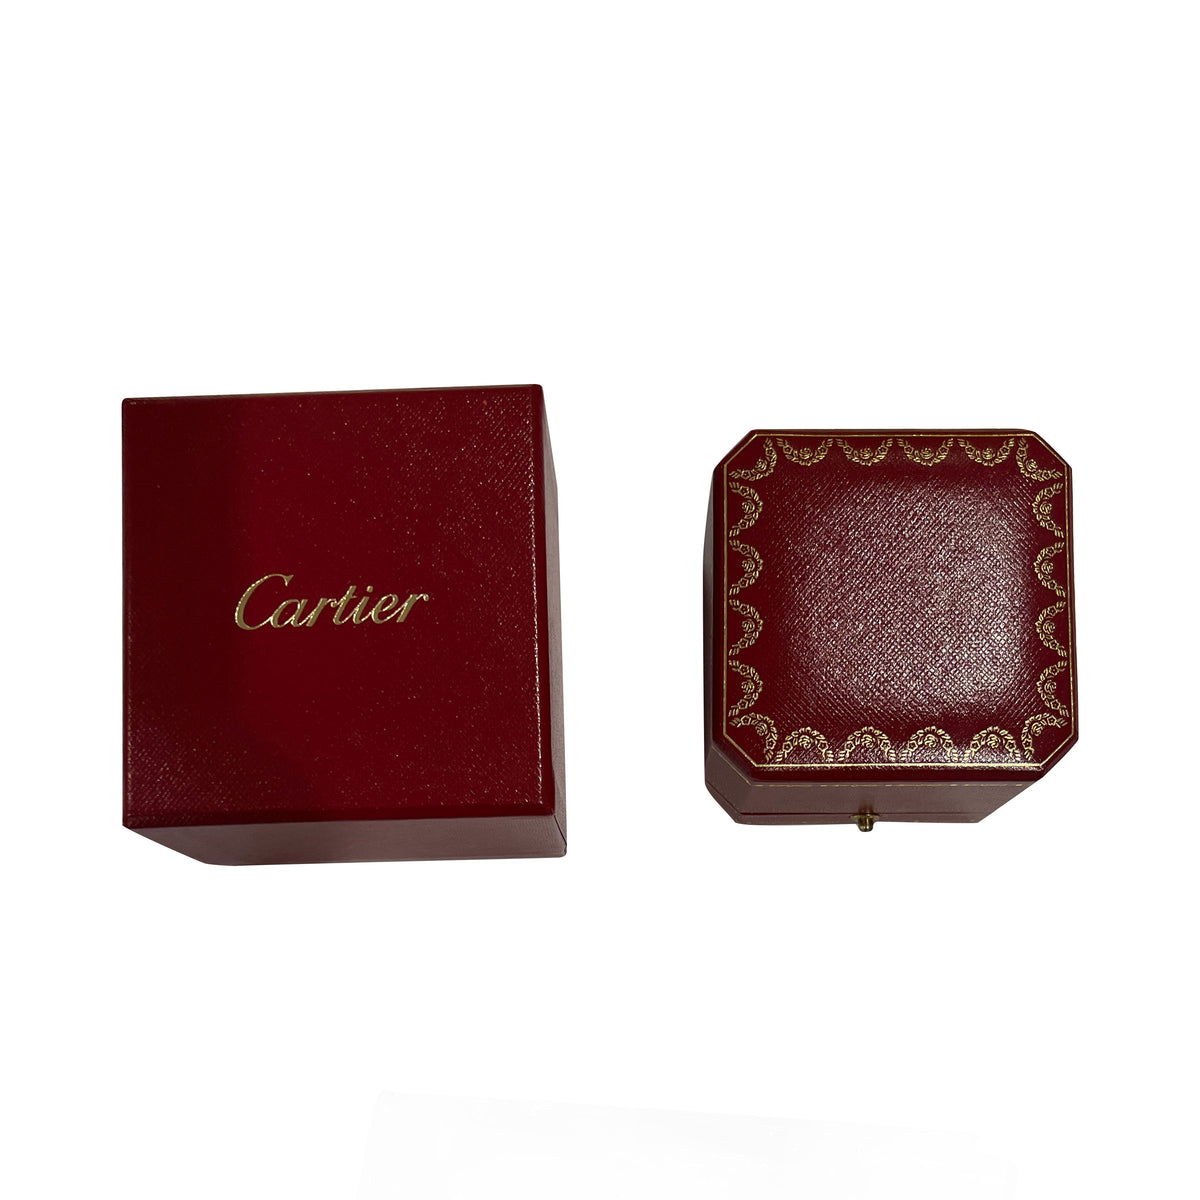 Cartier Love Diamond Ring in 18k White Gold 0.46 CTW